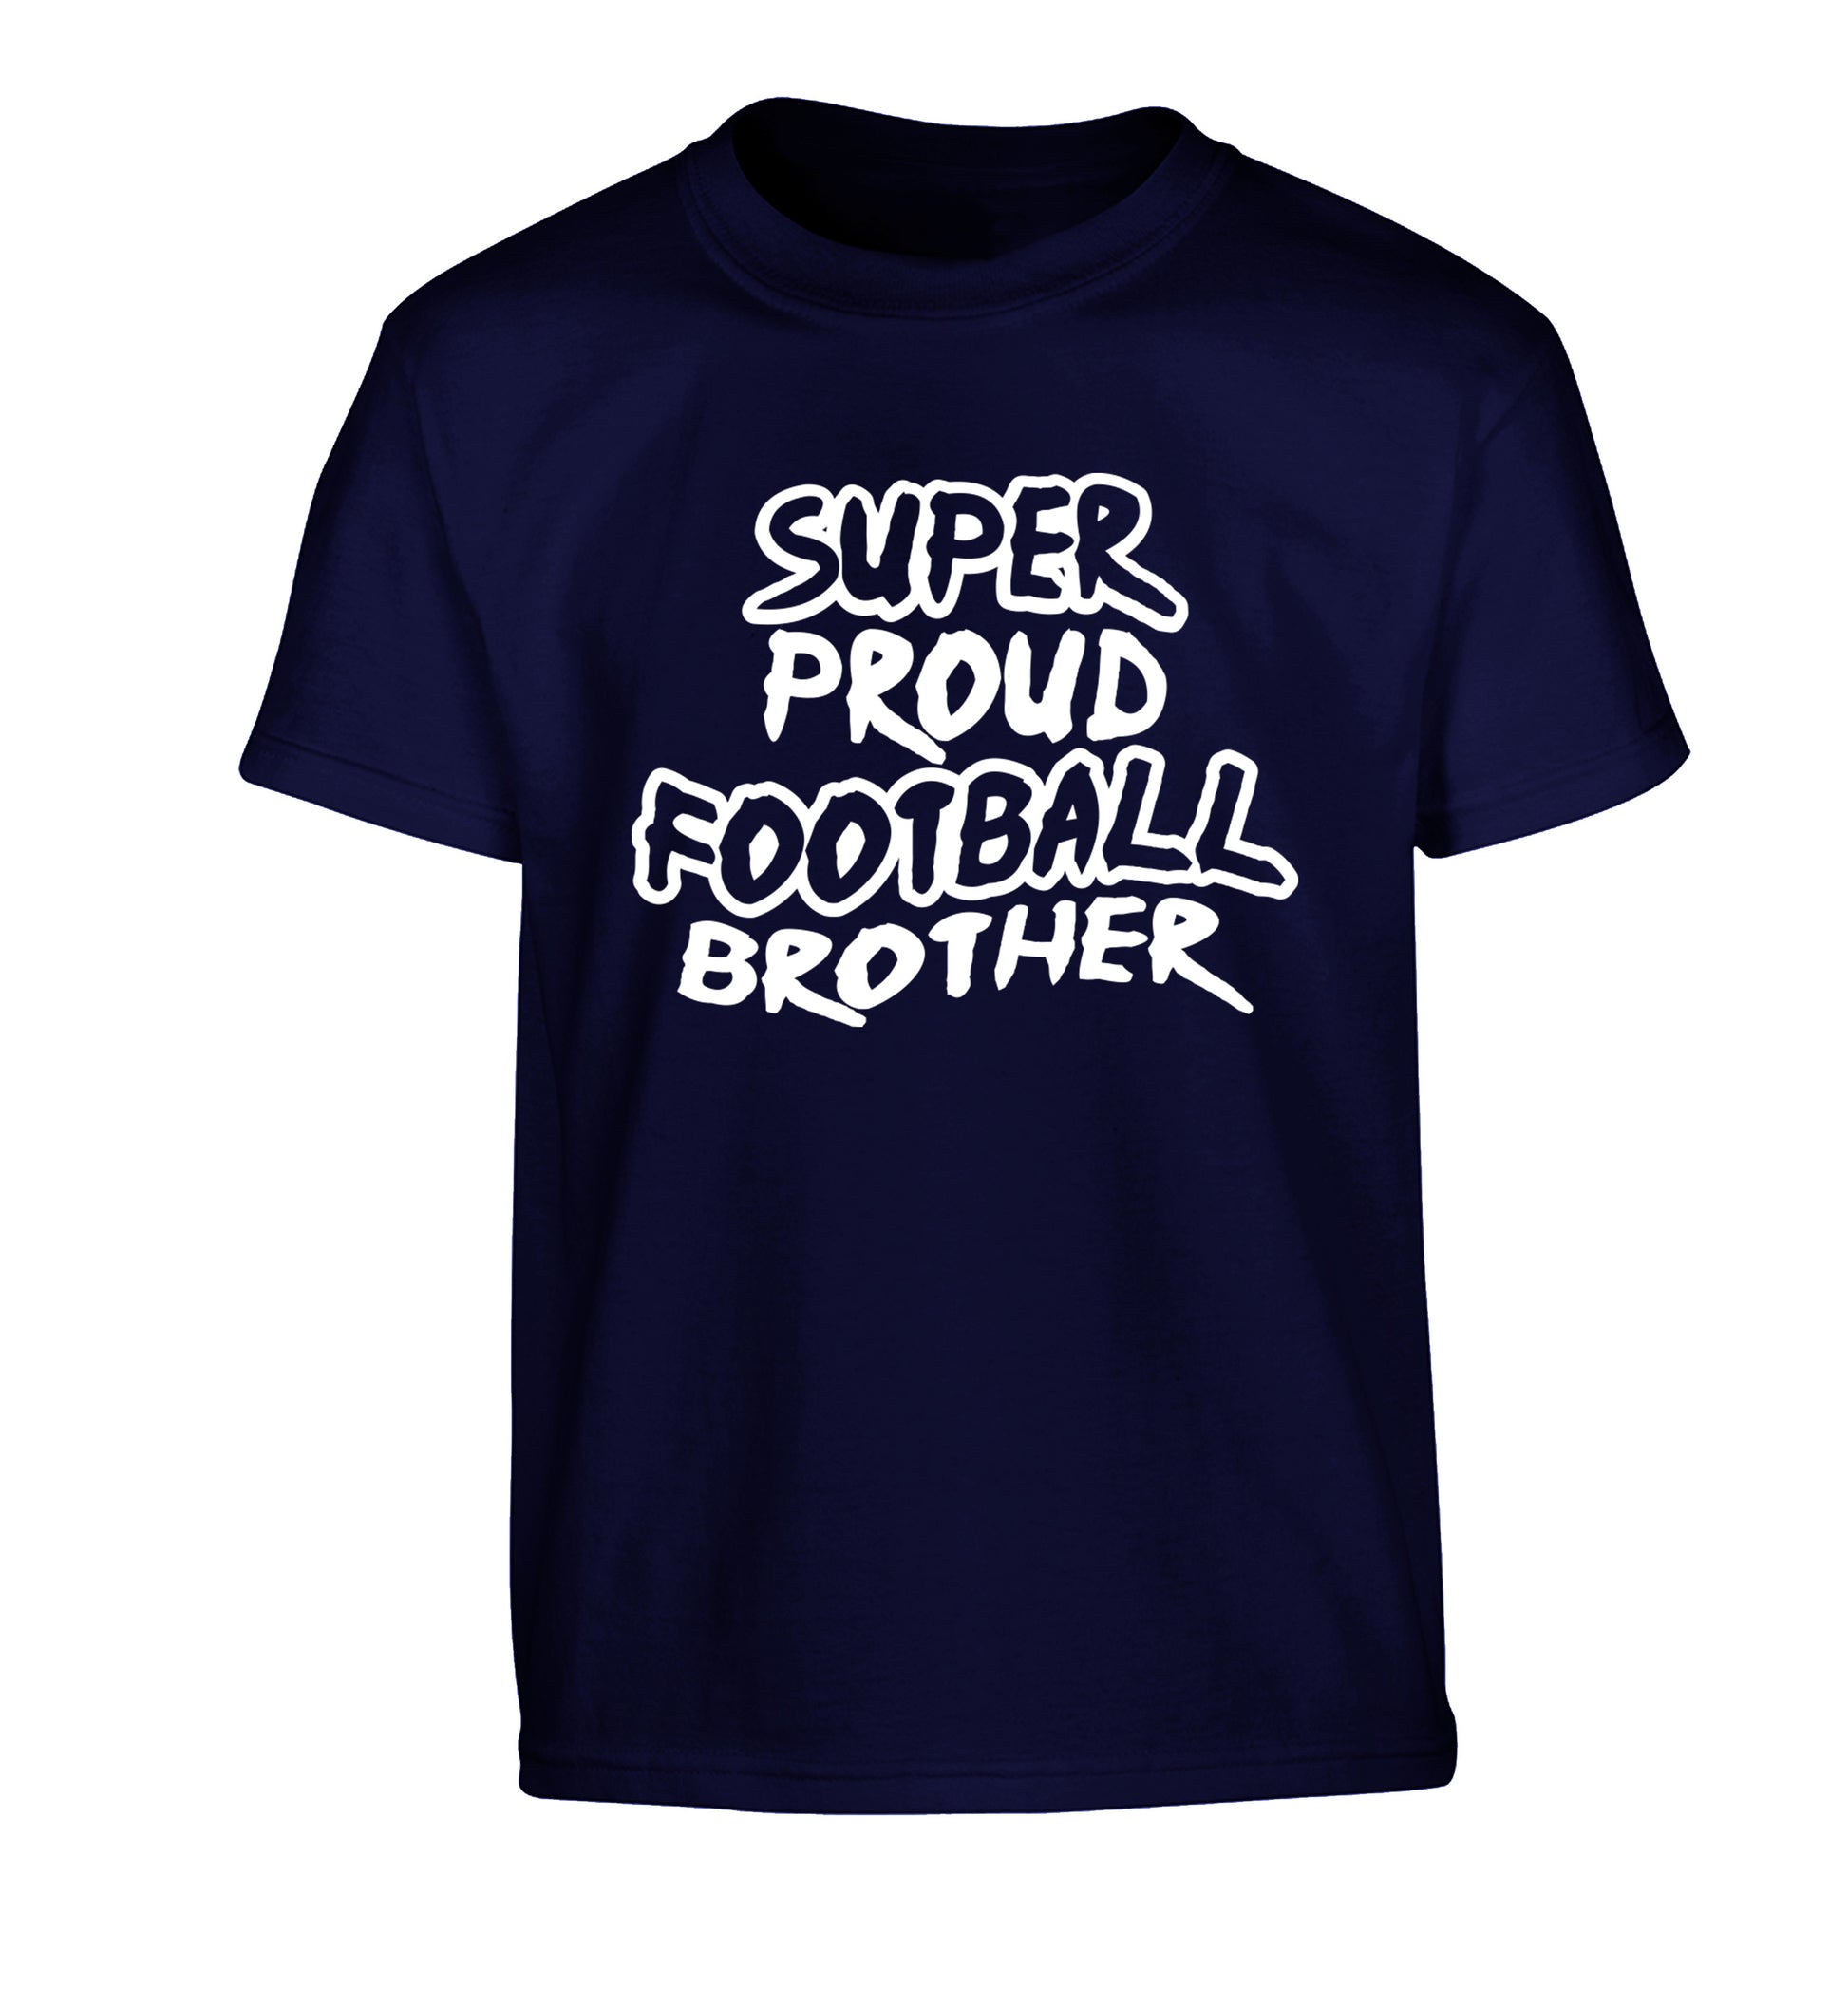 Super proud football brother Children's navy Tshirt 12-14 Years